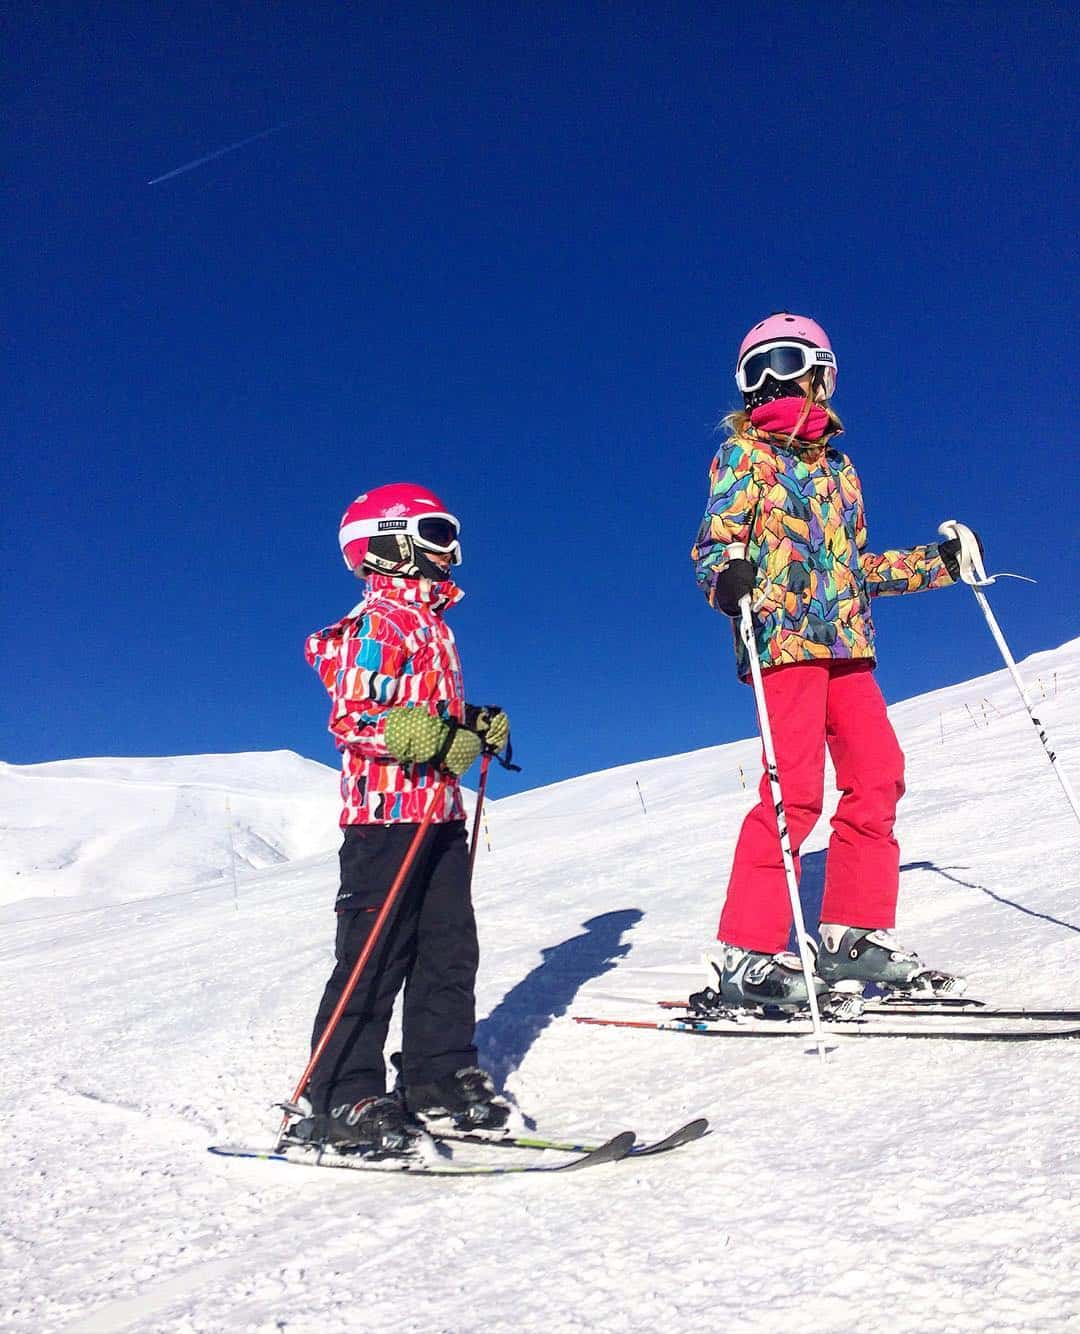 essentials for skiing - kids ski gear